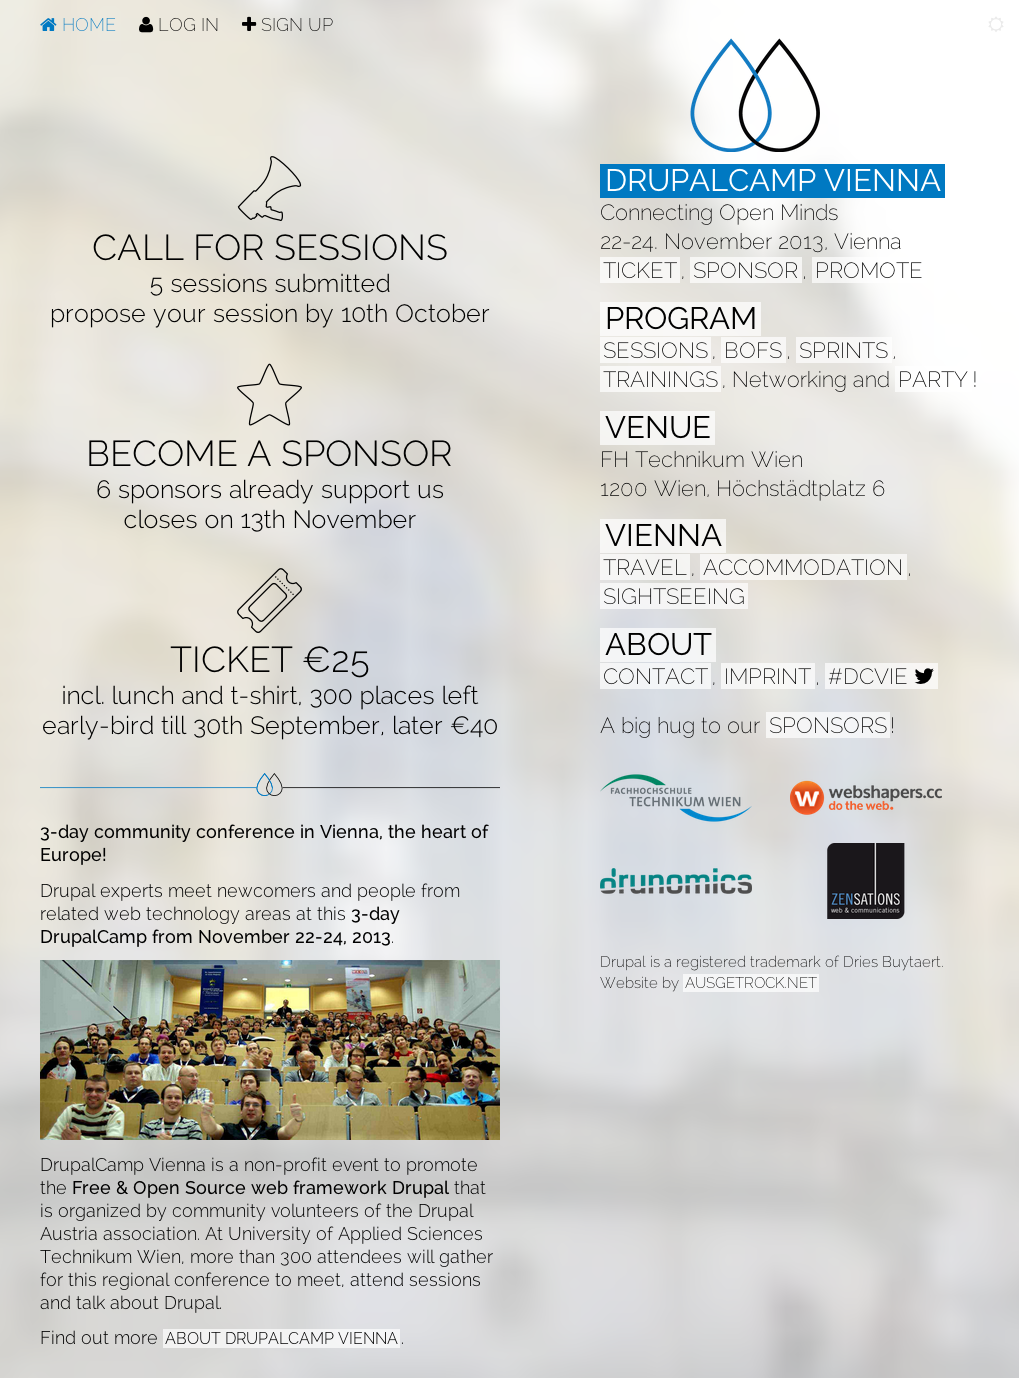 DrupalCamp Vienna - Connecting Open Minds